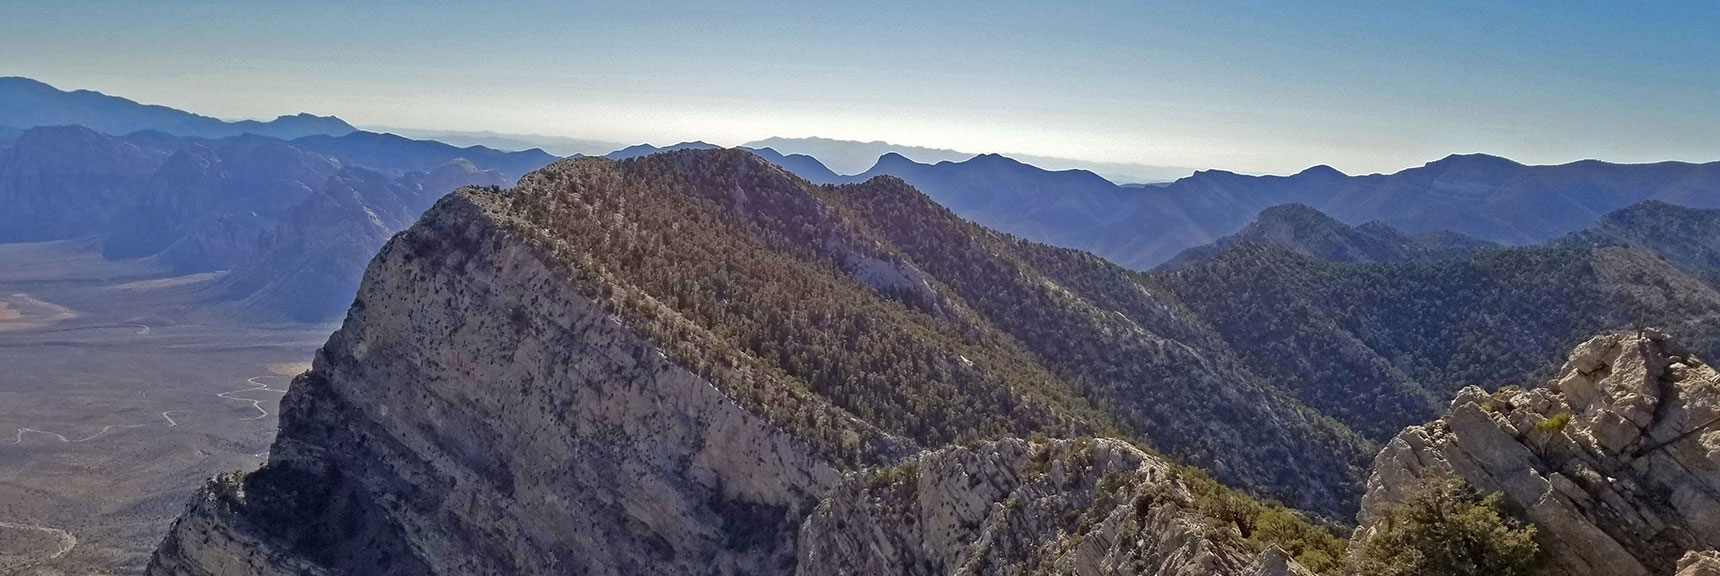 Long Summit of El Padre Mt Viewed from La Madre Mt Summit | La Madre Mountain,, El Padre Mountain, Burnt Peak | La Madre Mountains Wilderness, Nevada